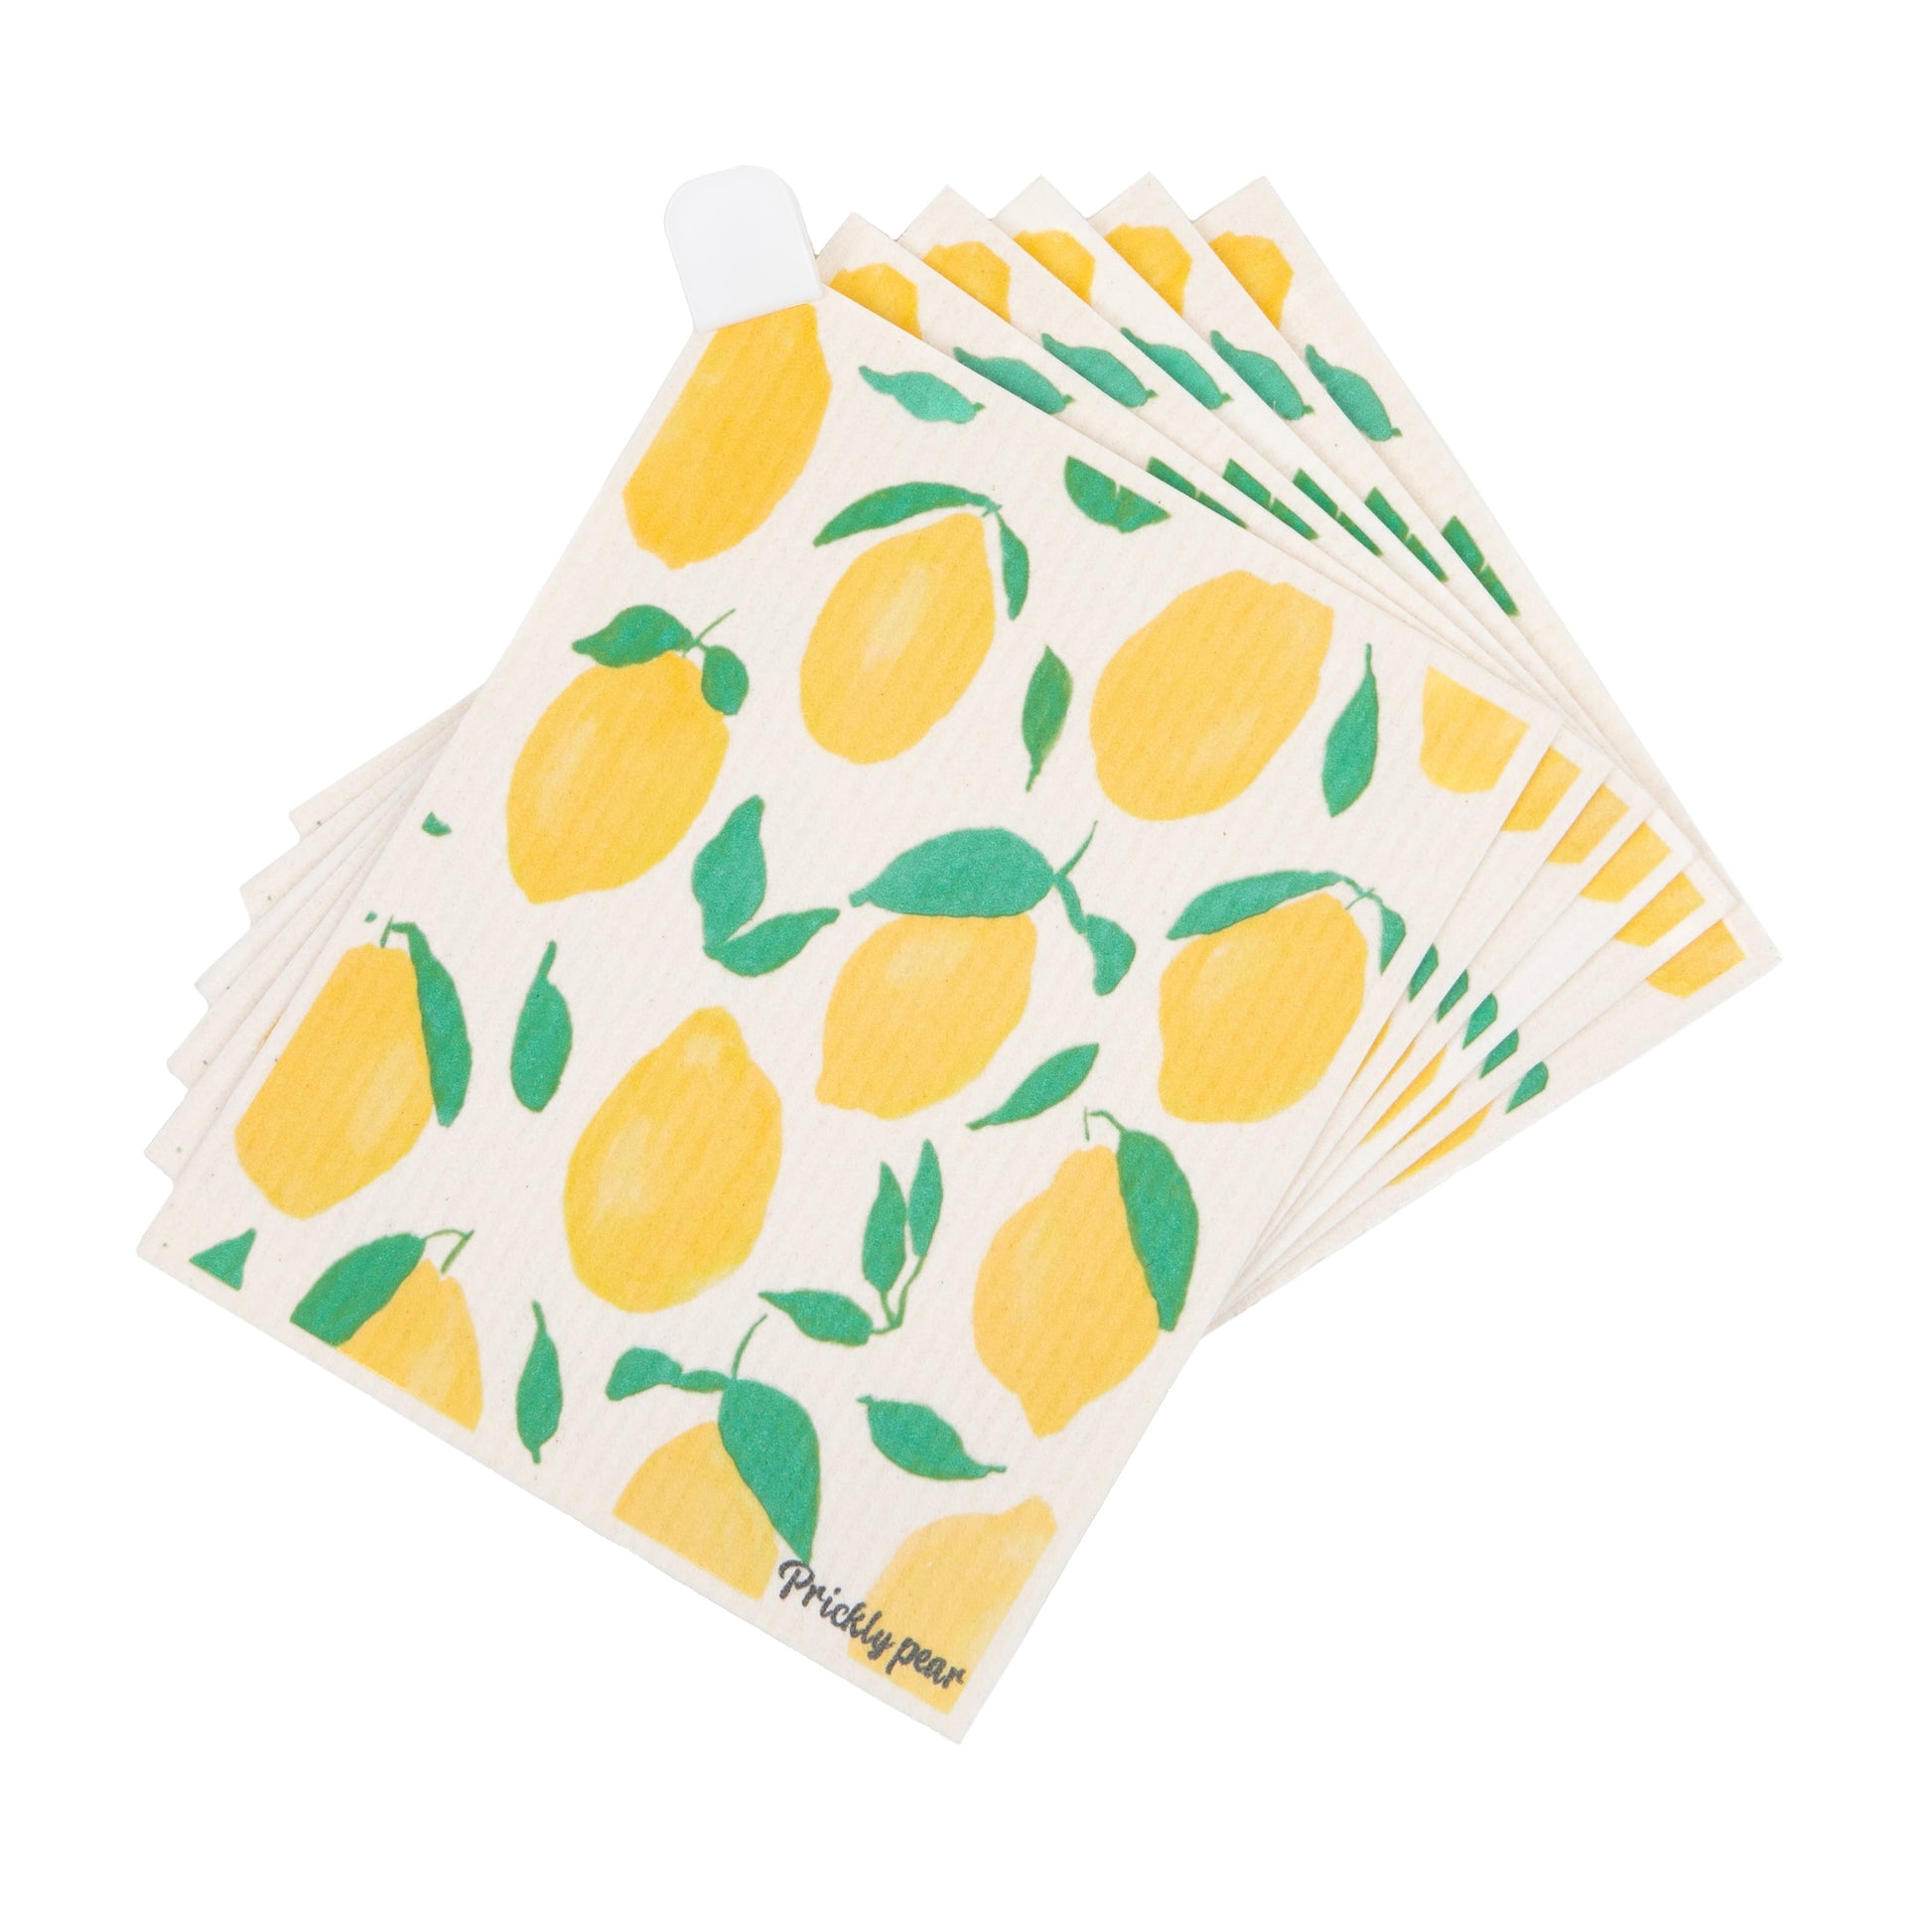 Lemon fresh Prickly Pear reusable paper towels 6 pack large